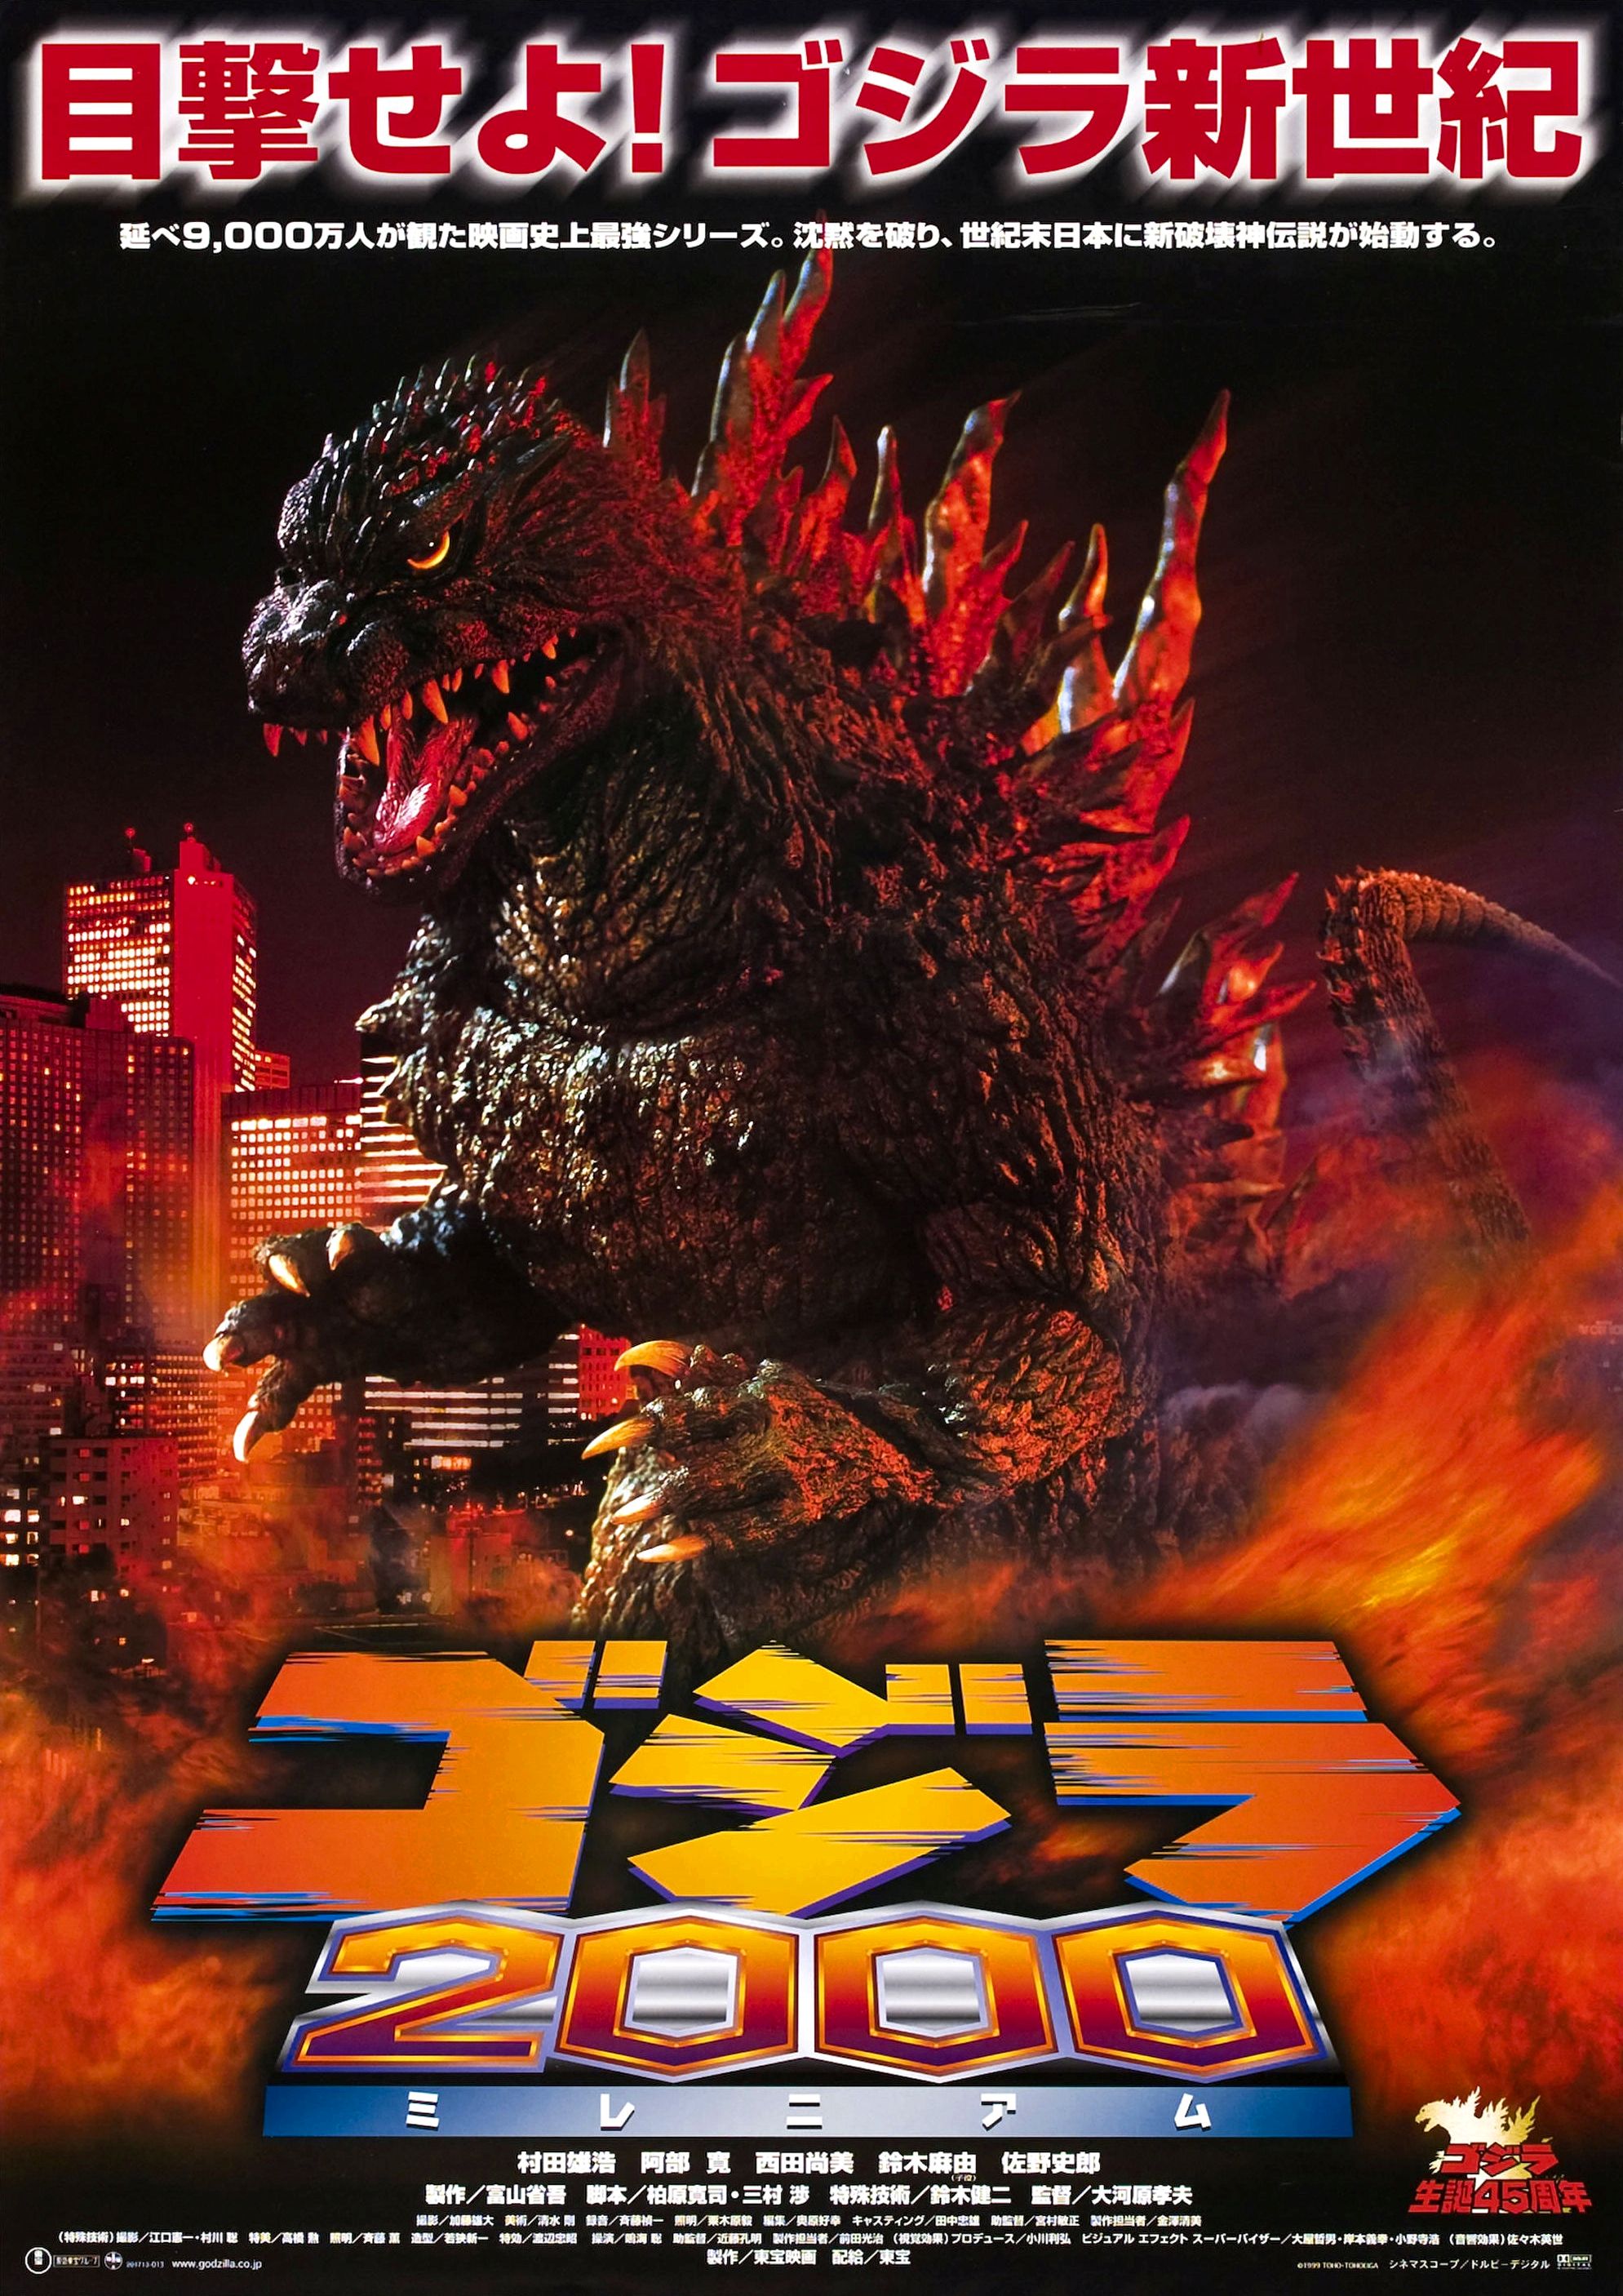 Godzilla (1998 film) - Wikipedia